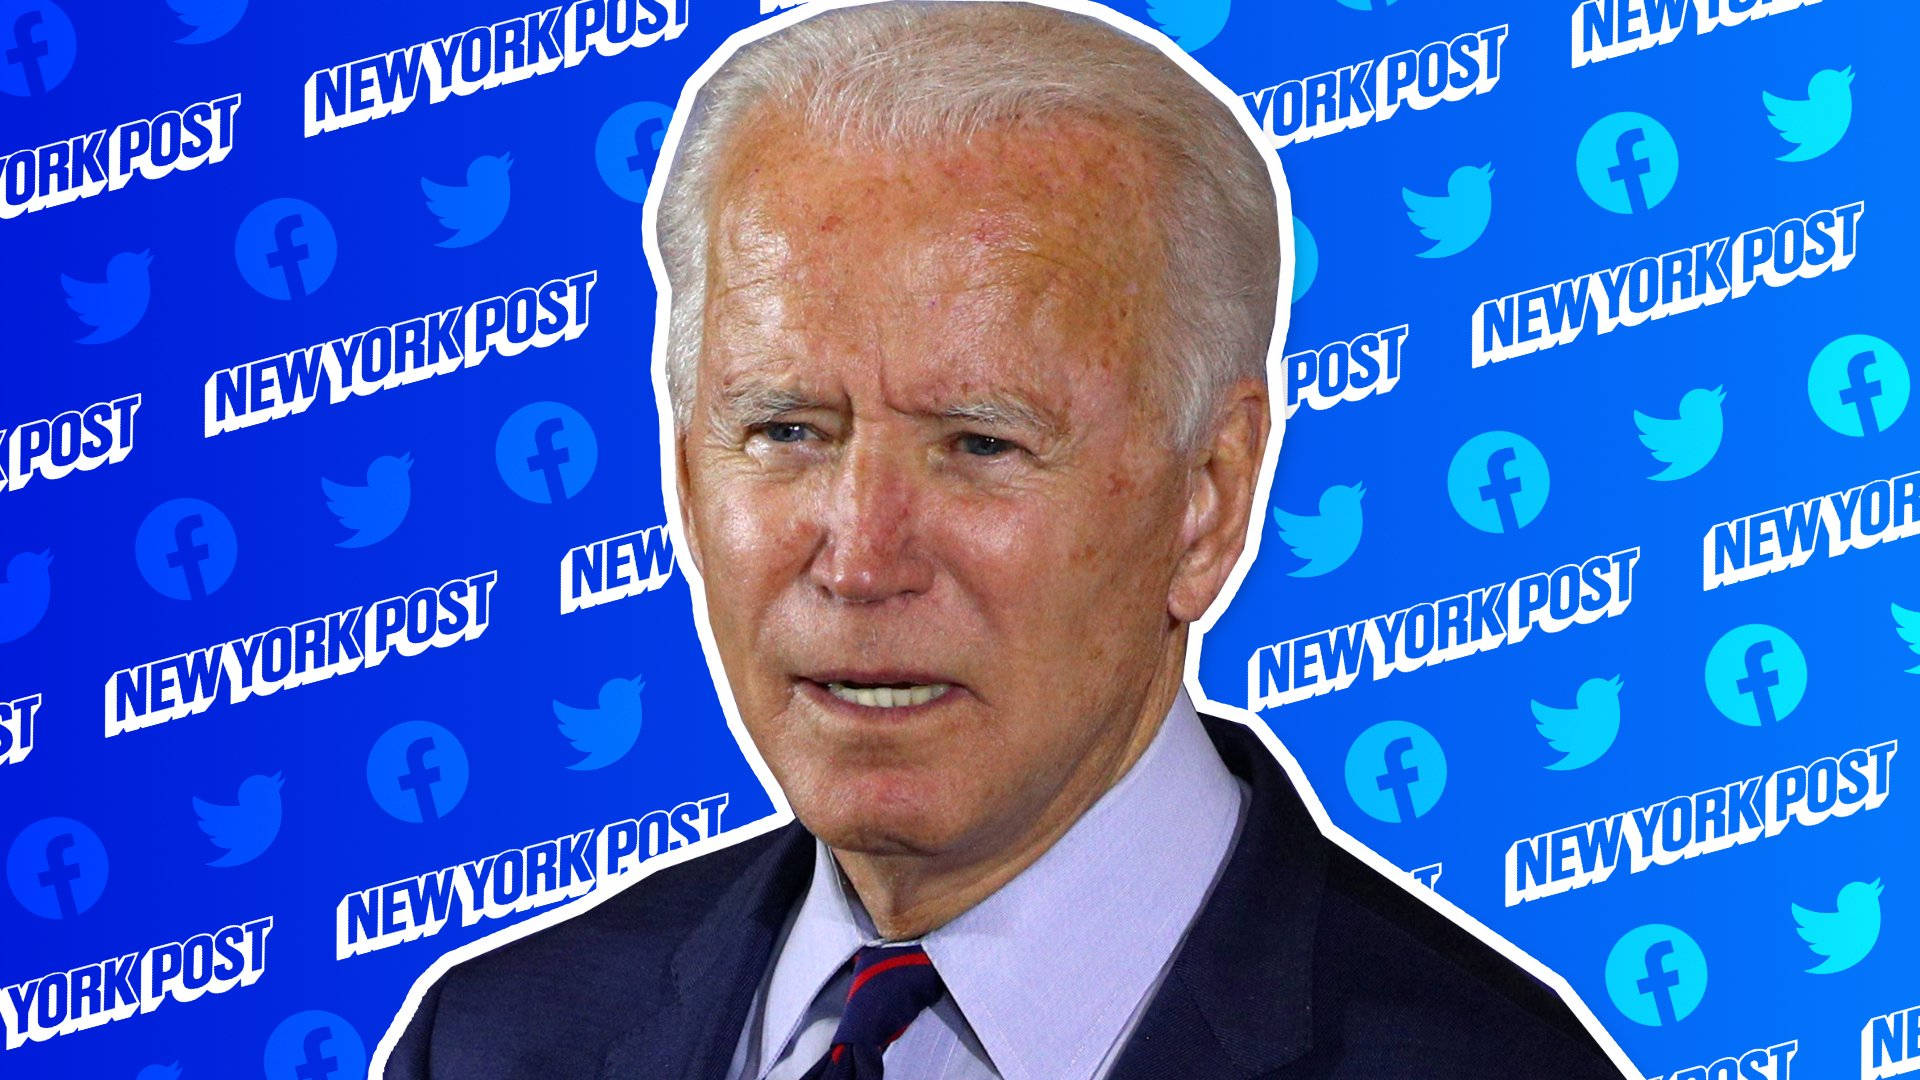 Joe Biden New York Post Background